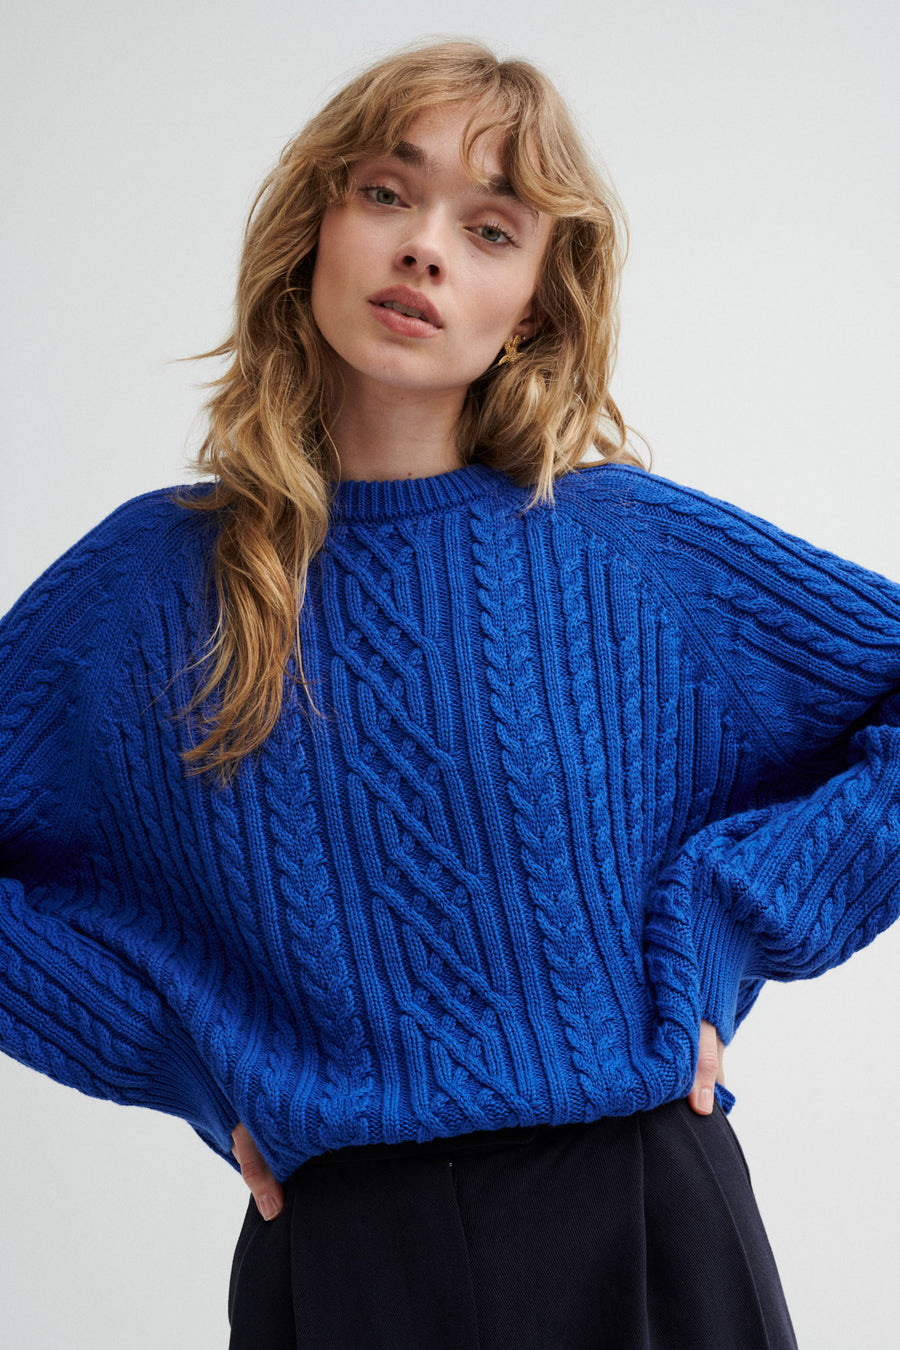 Sweater in organic cotton / 16 / 14 / cobalt blue